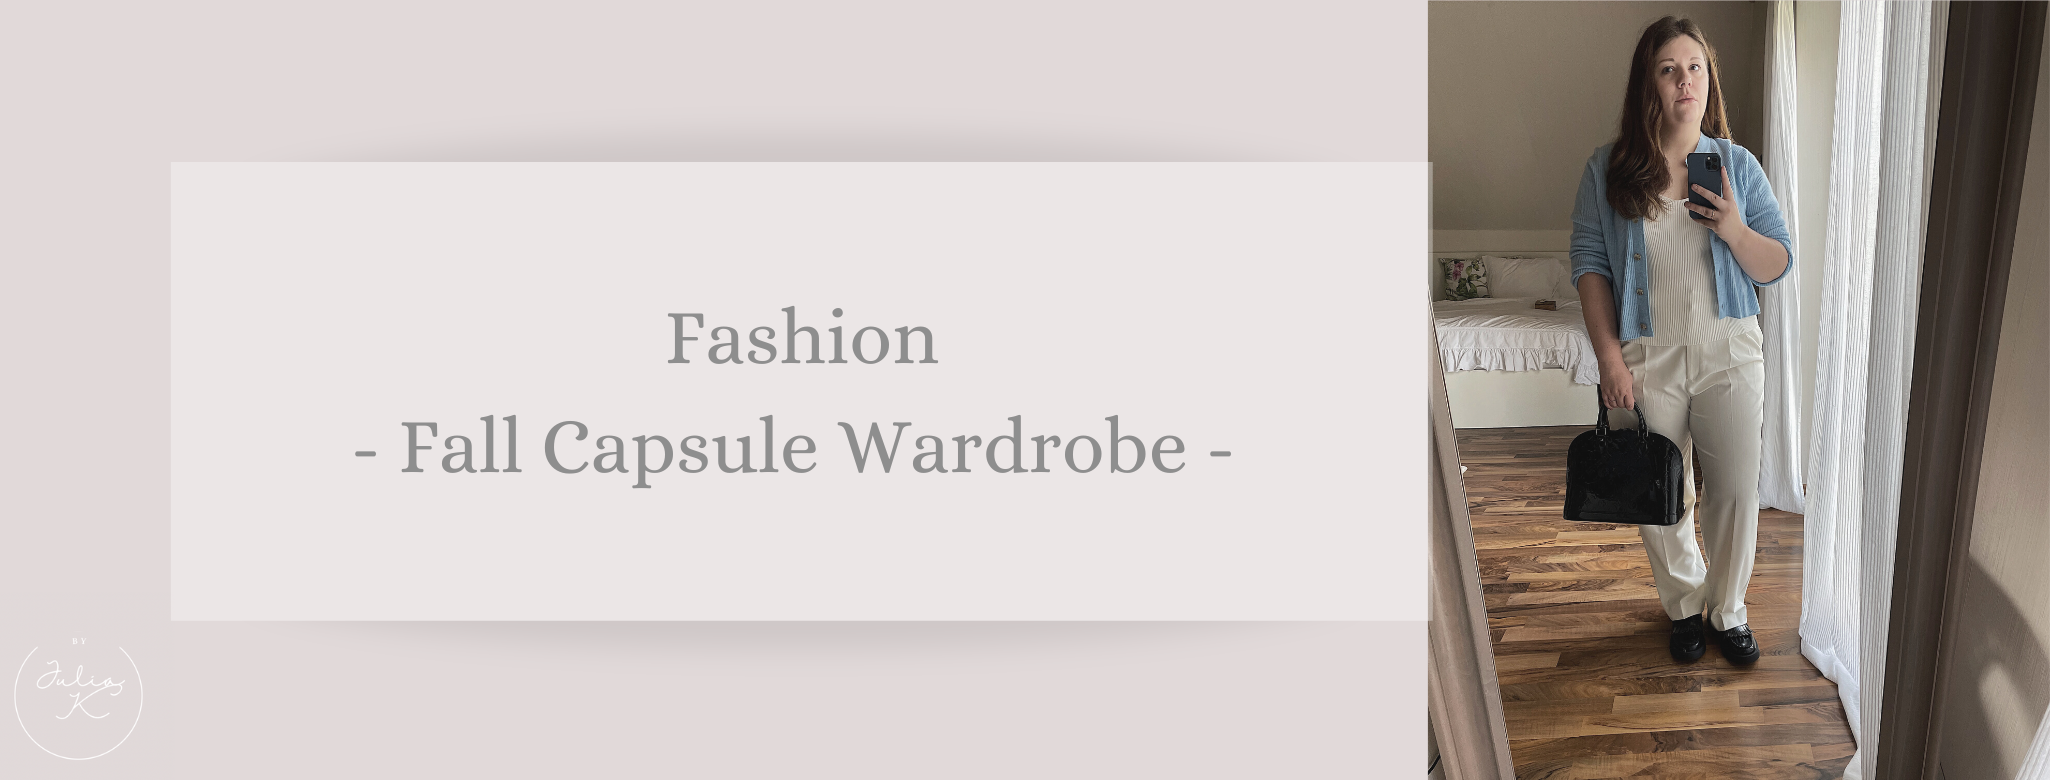 Fashion: Fall Capsule Wardrobe